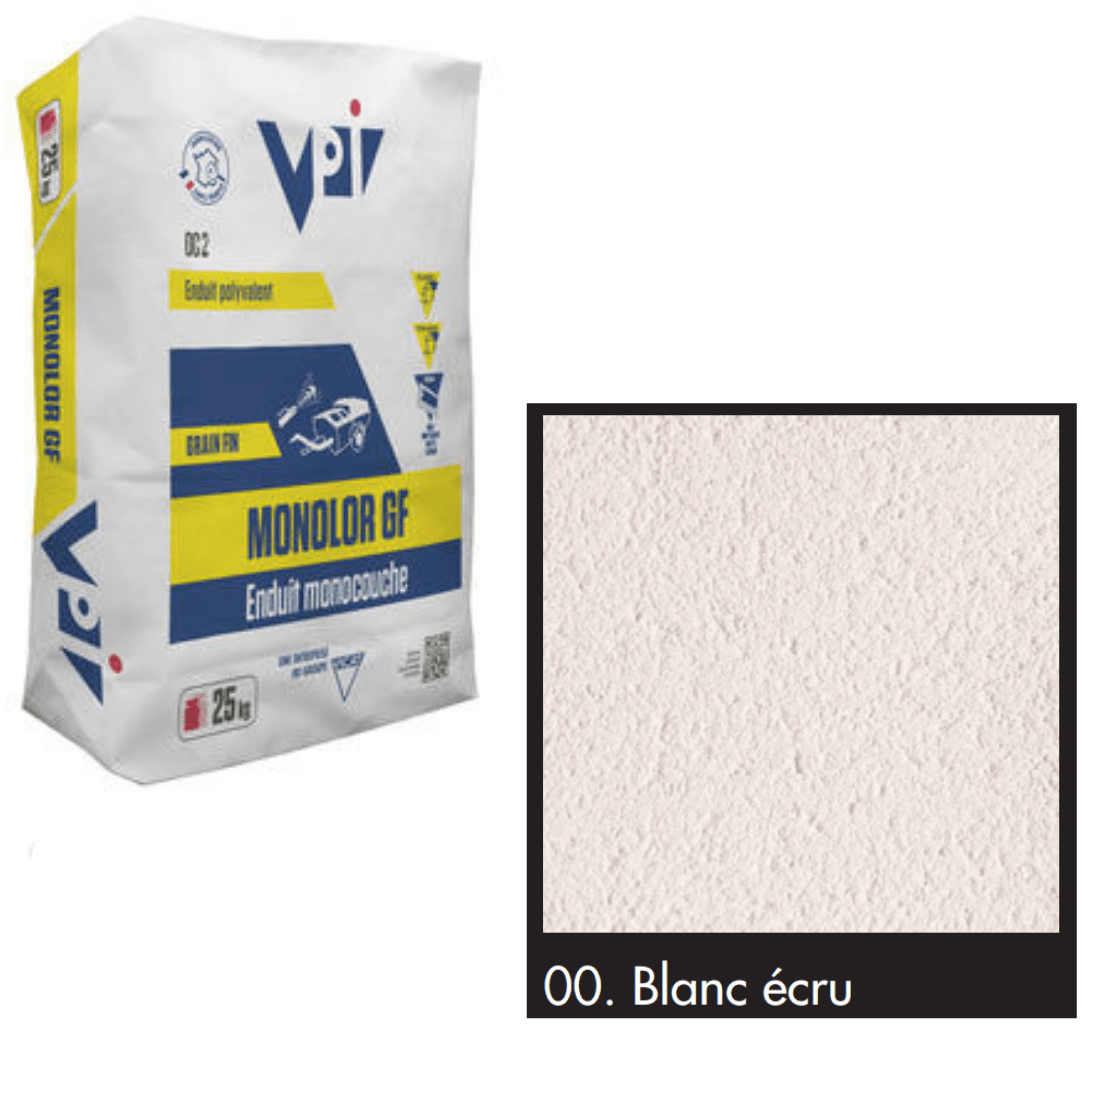 VPI Monocal GM00 Blanc Ecru 25kg - Builders Merchant Direct